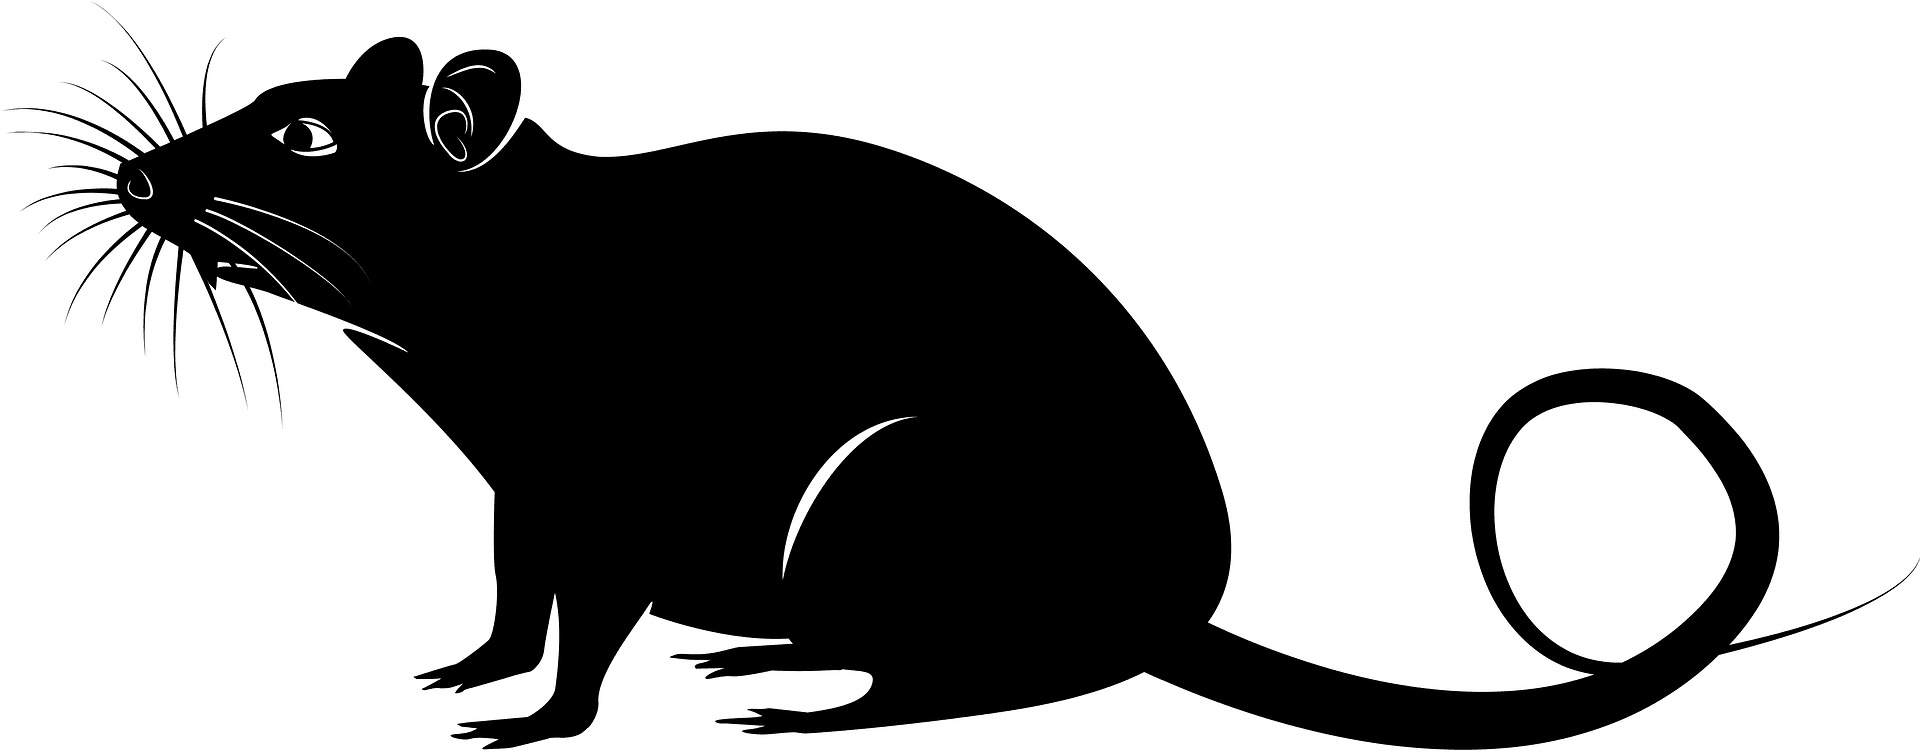 Rat mouse silhouette clipart image